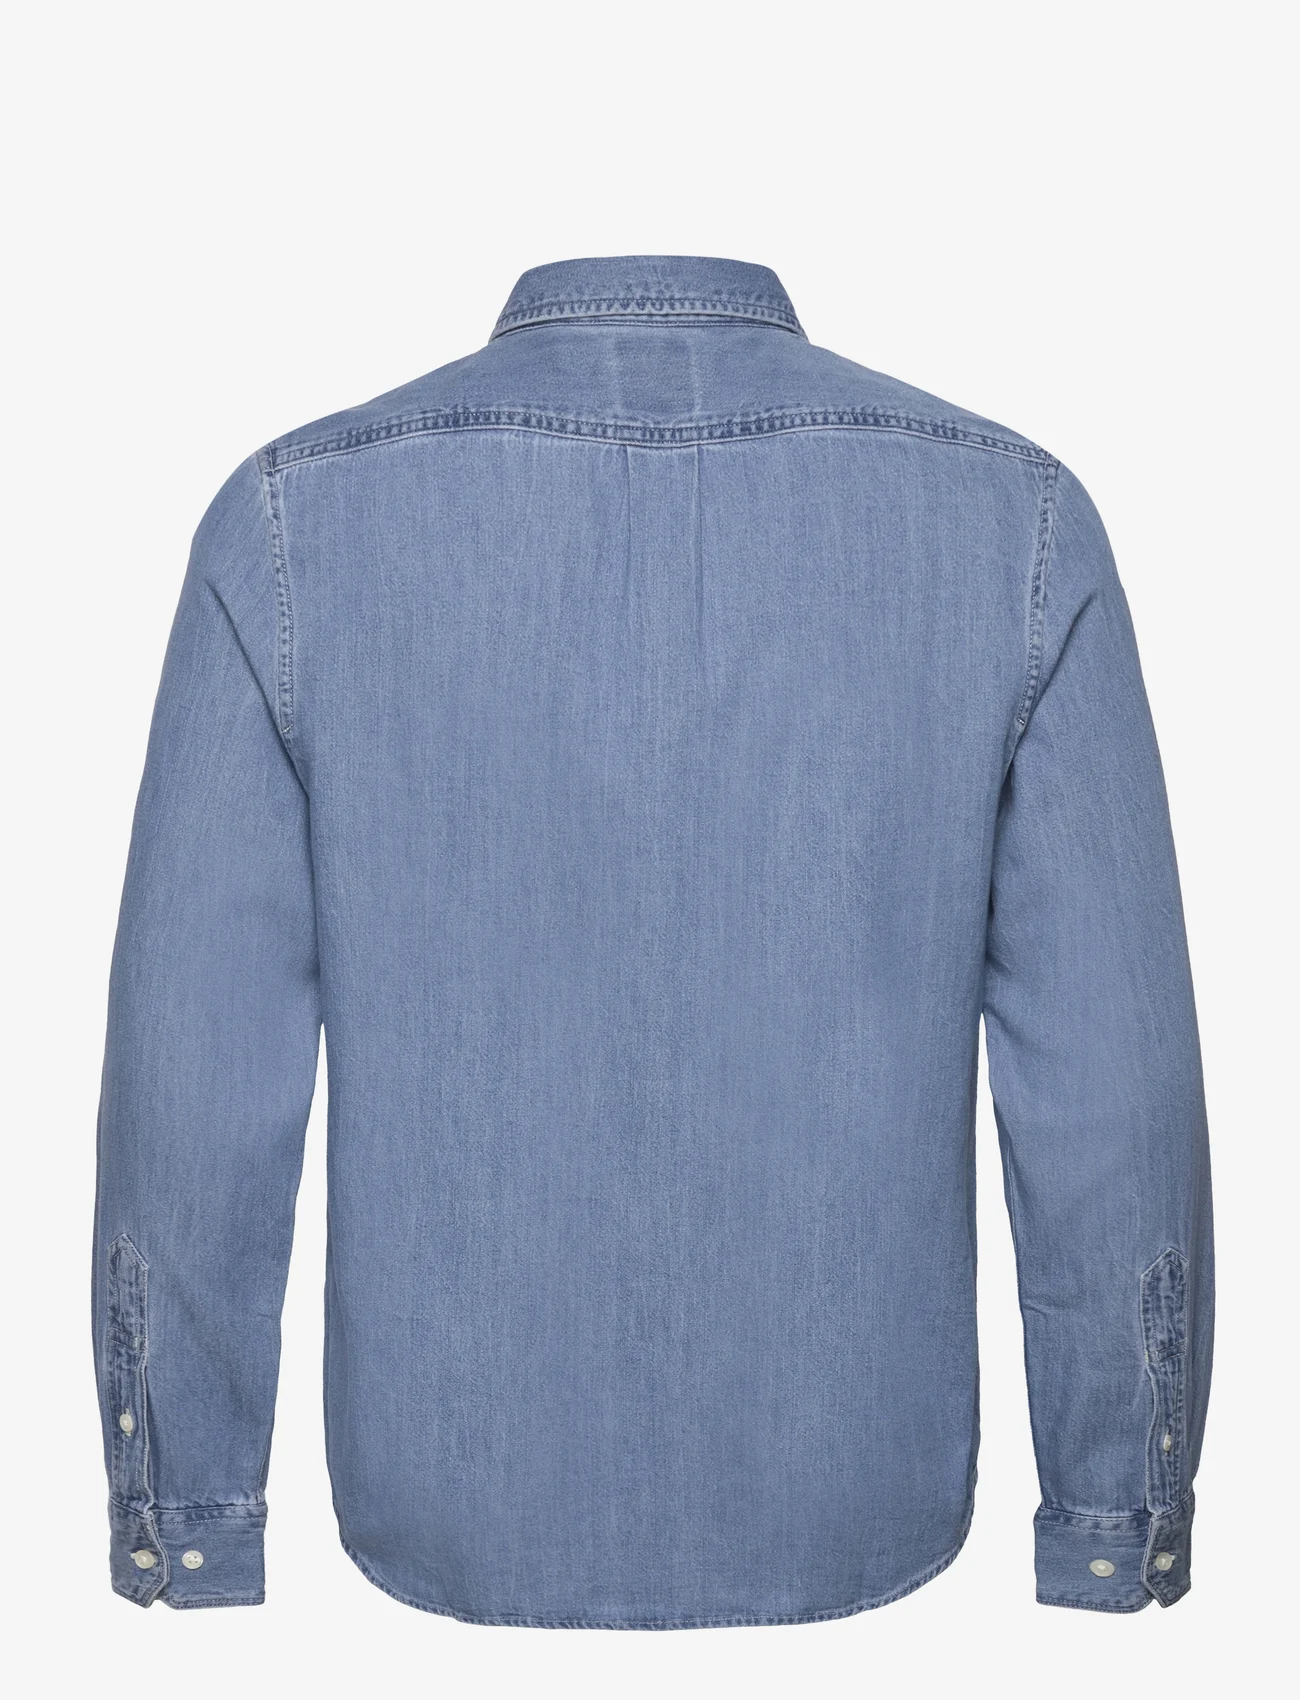 Lee Jeans - LEESURE SHIRT - ruutupaidat - shasta blue - 1